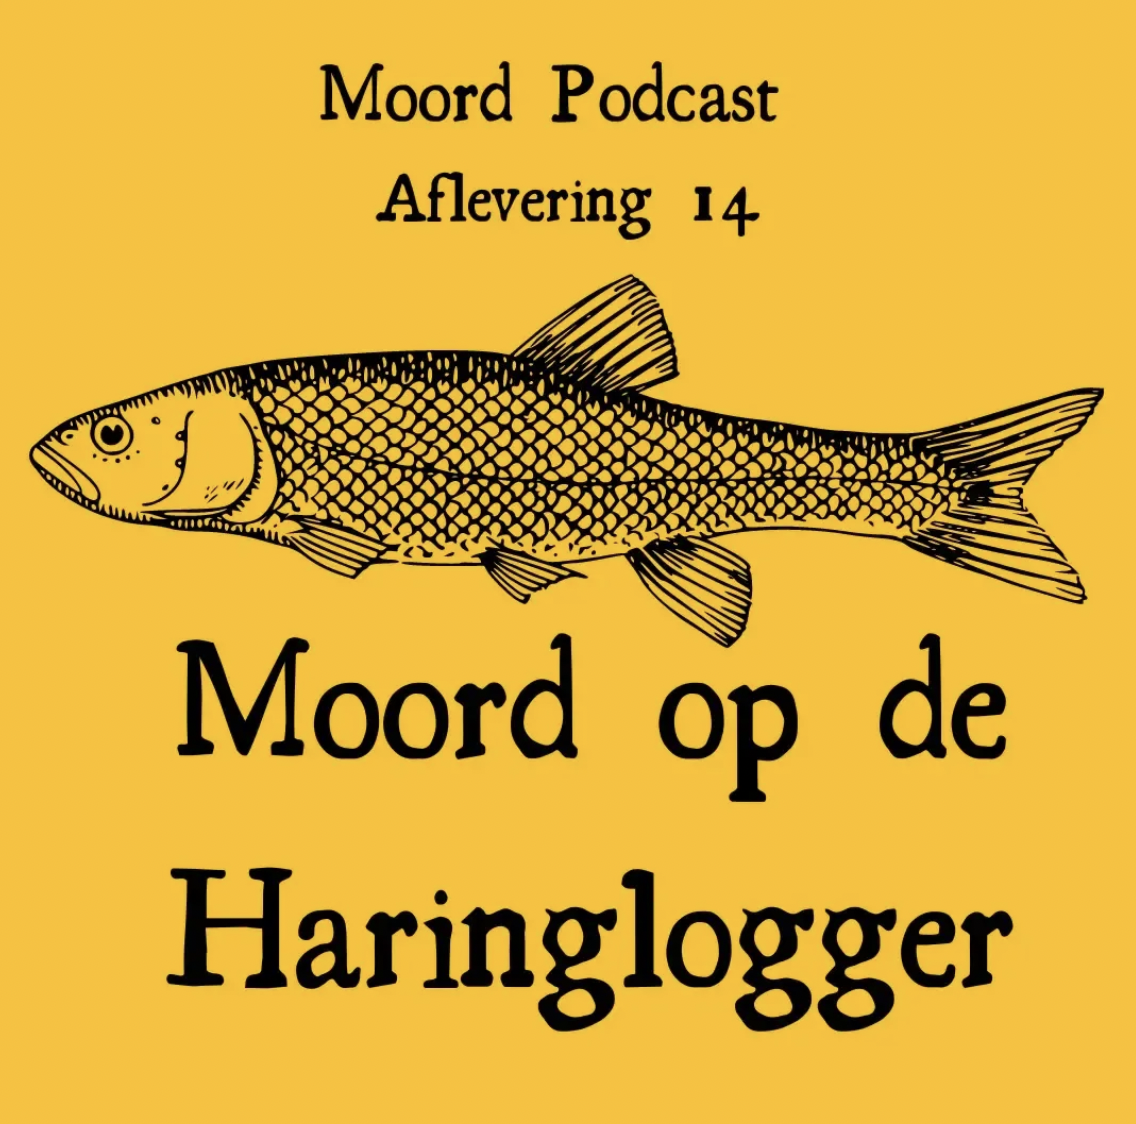 Moord Podcast - Moord op de Haringlogger